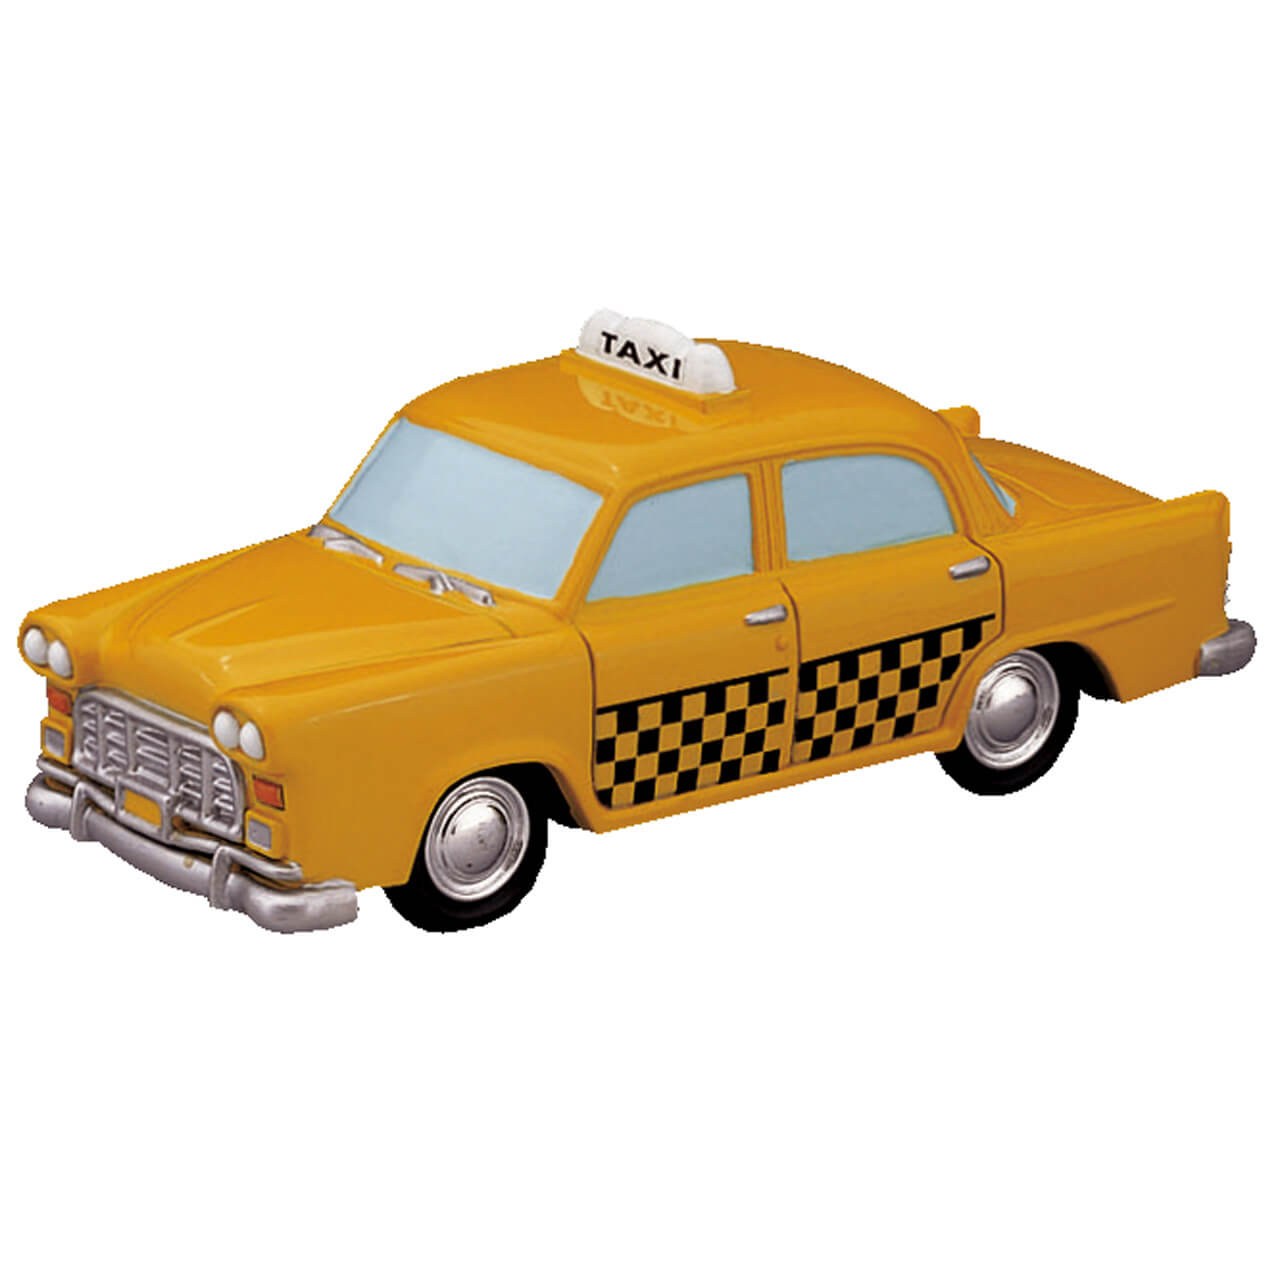 Taxi Cab Lemax